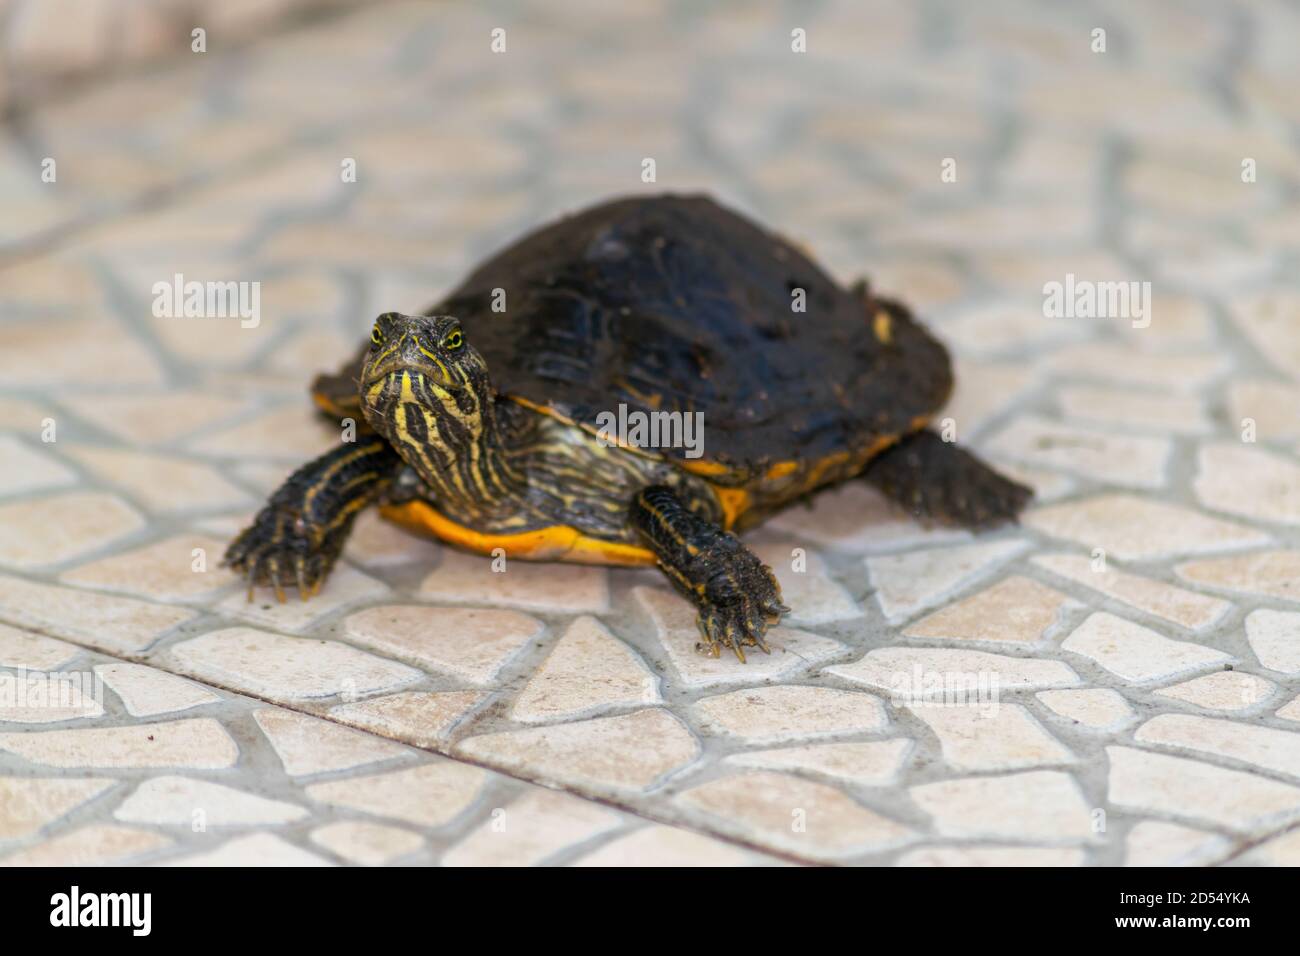 Mississippi turtle Stock Photo